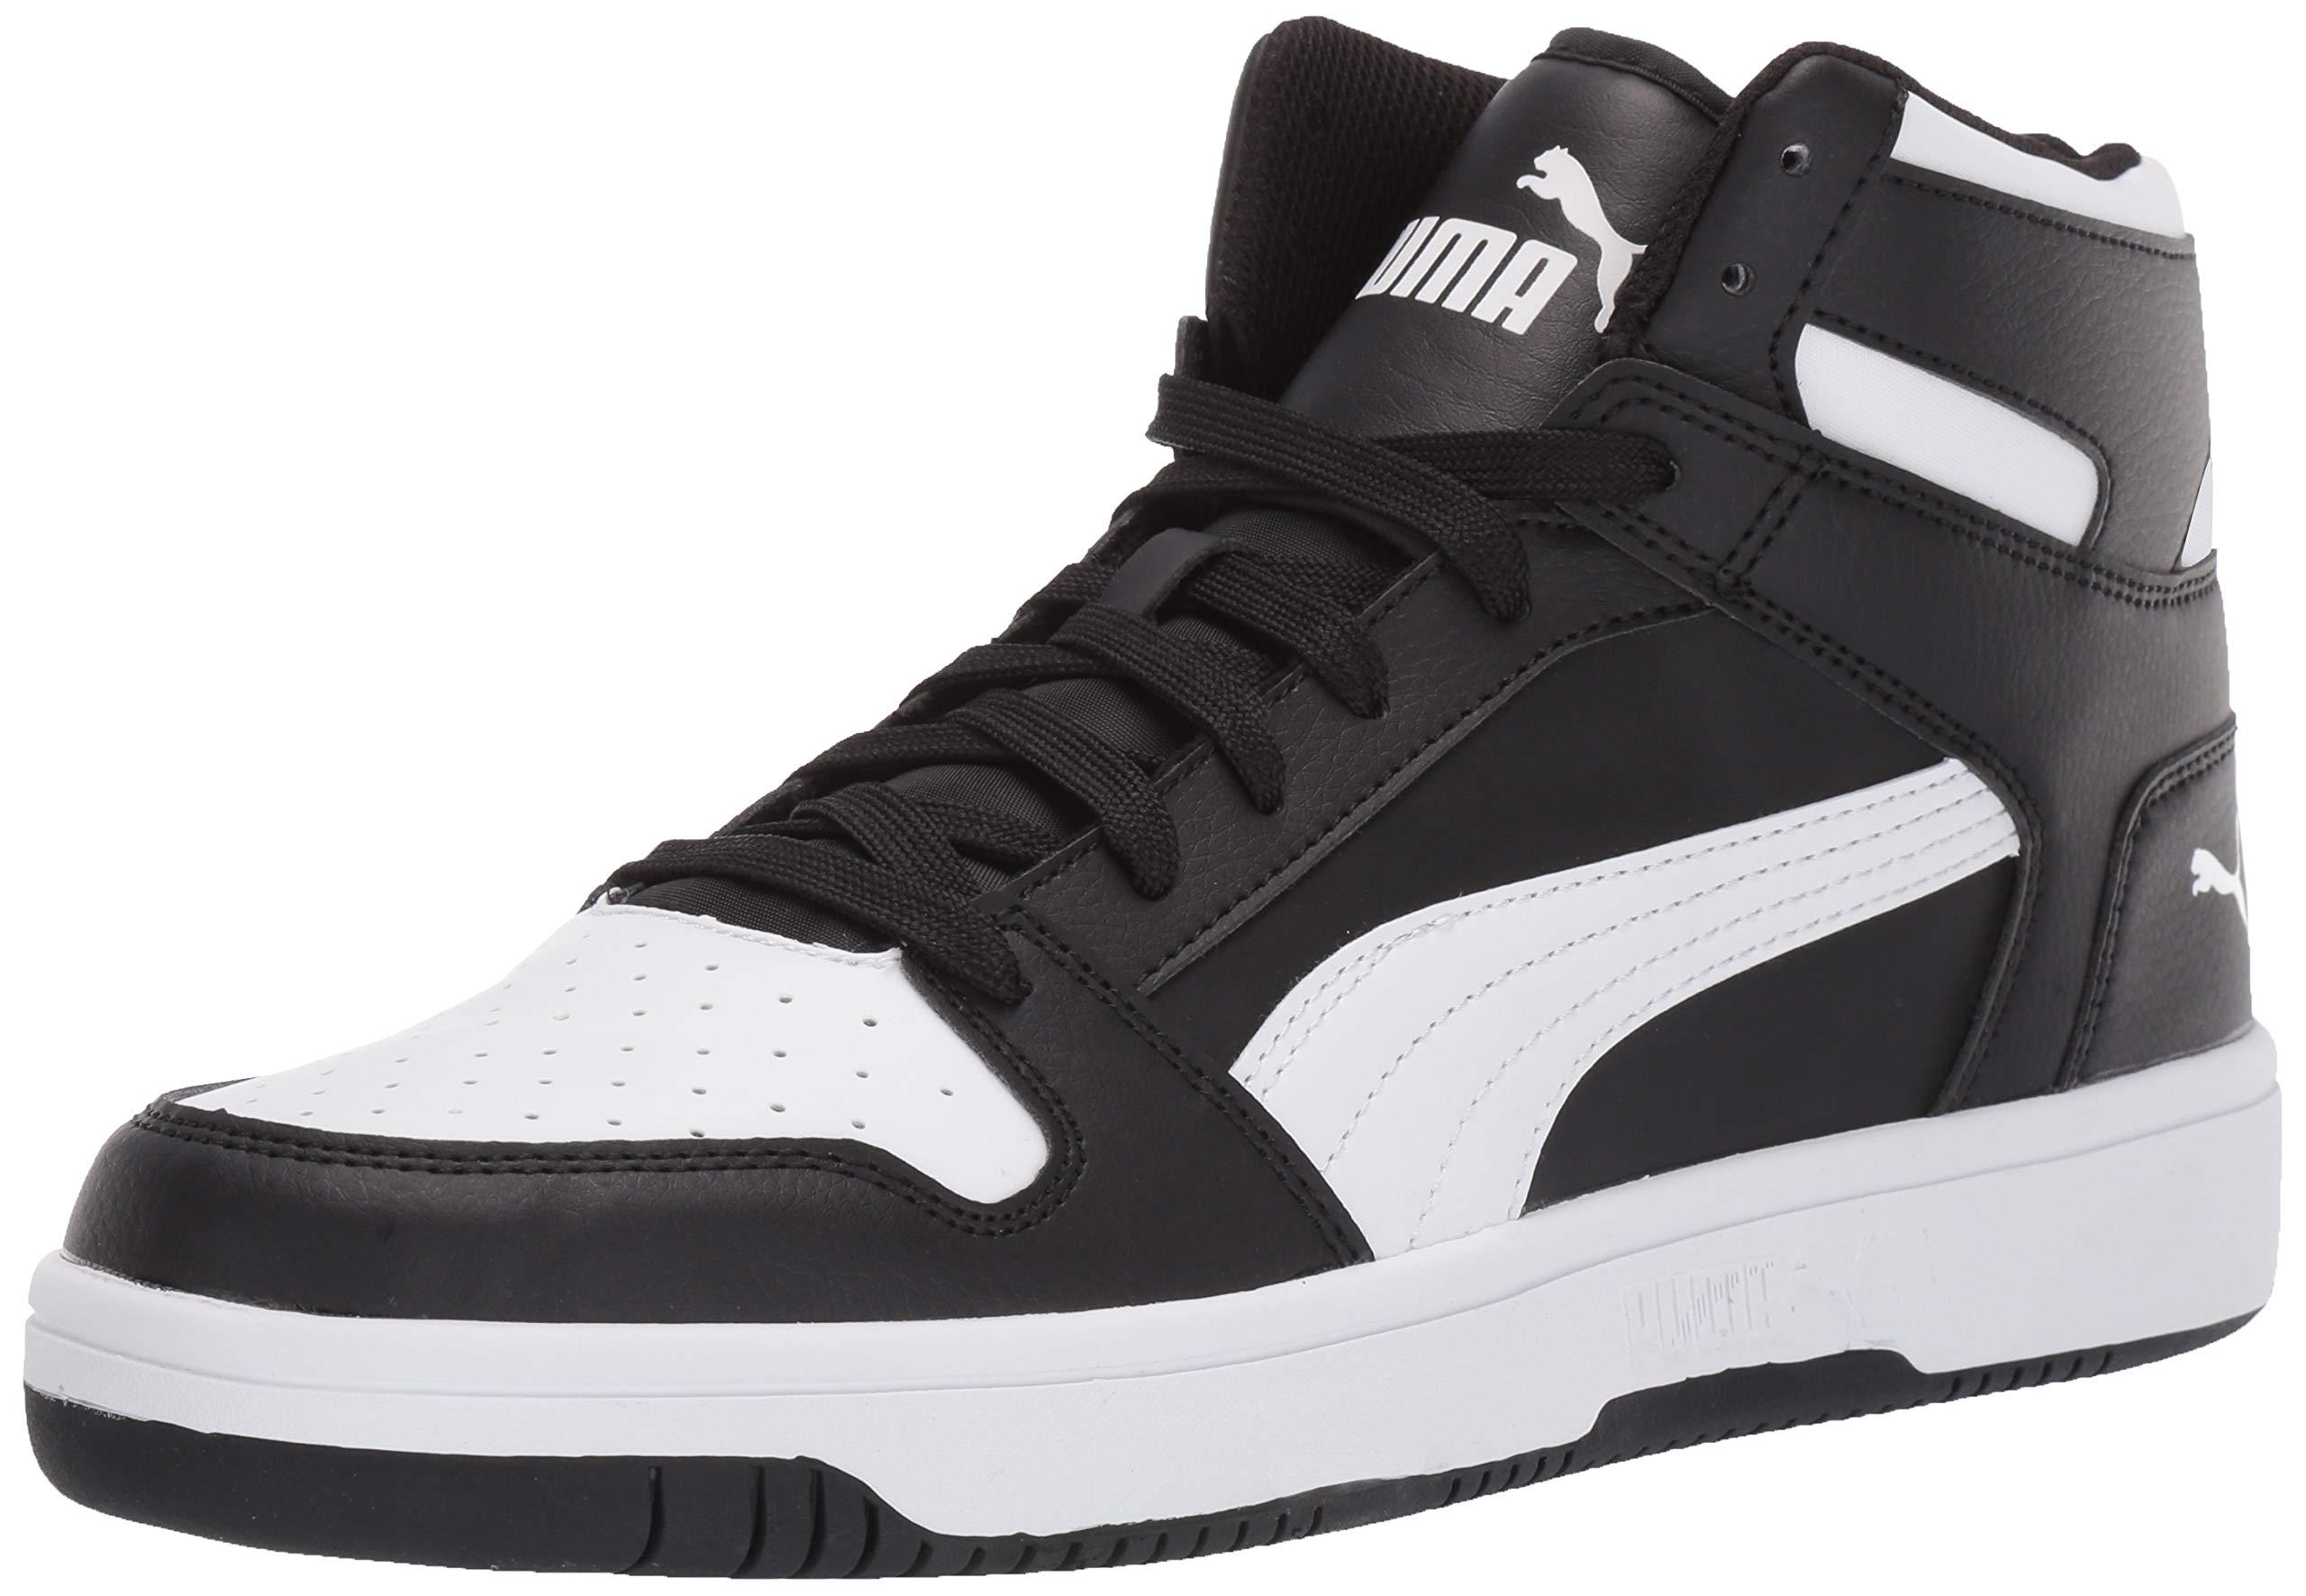 PUMA Rebound Layup Sneakers in Black/White (Black) for Men - Save 39% ...